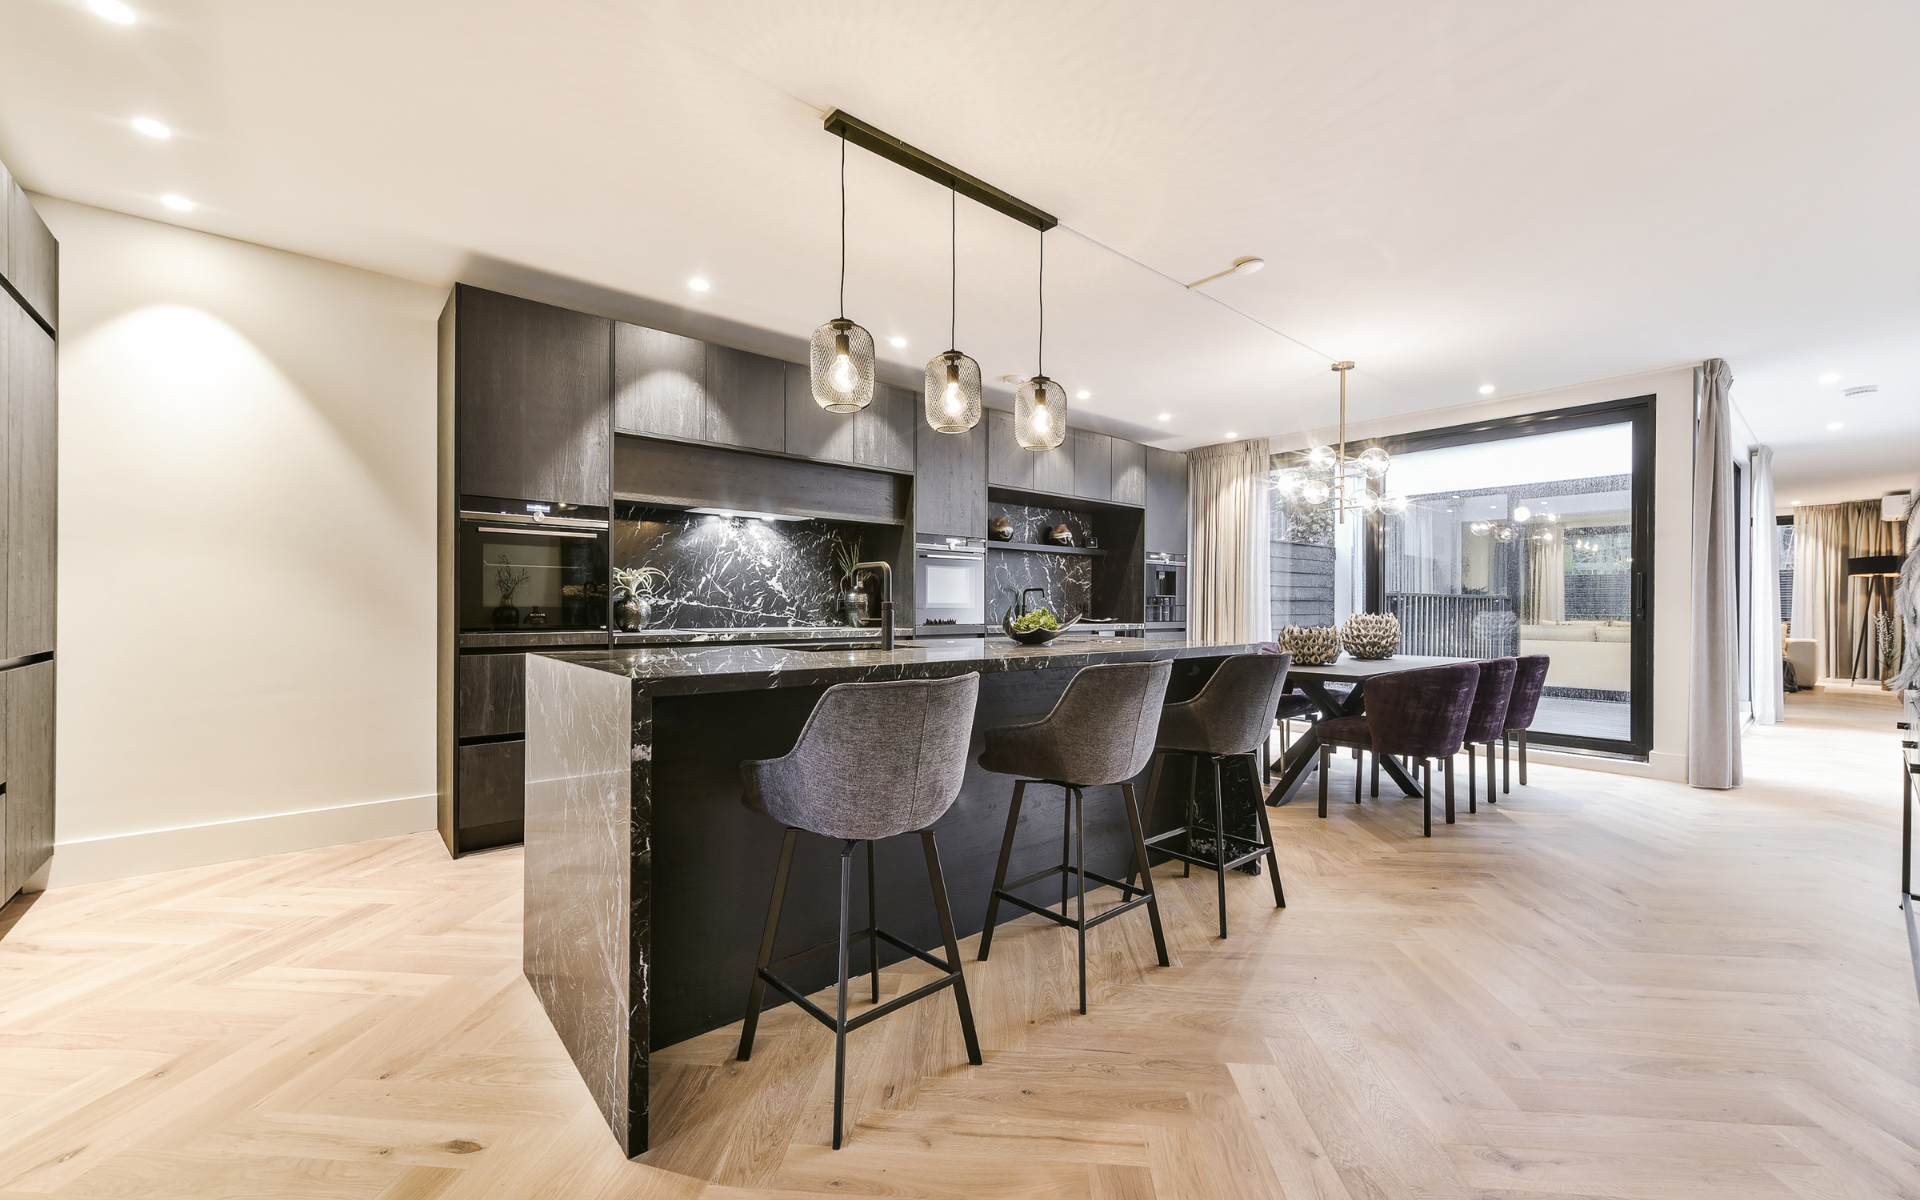 Elegant kitchen style with nero marquina marble